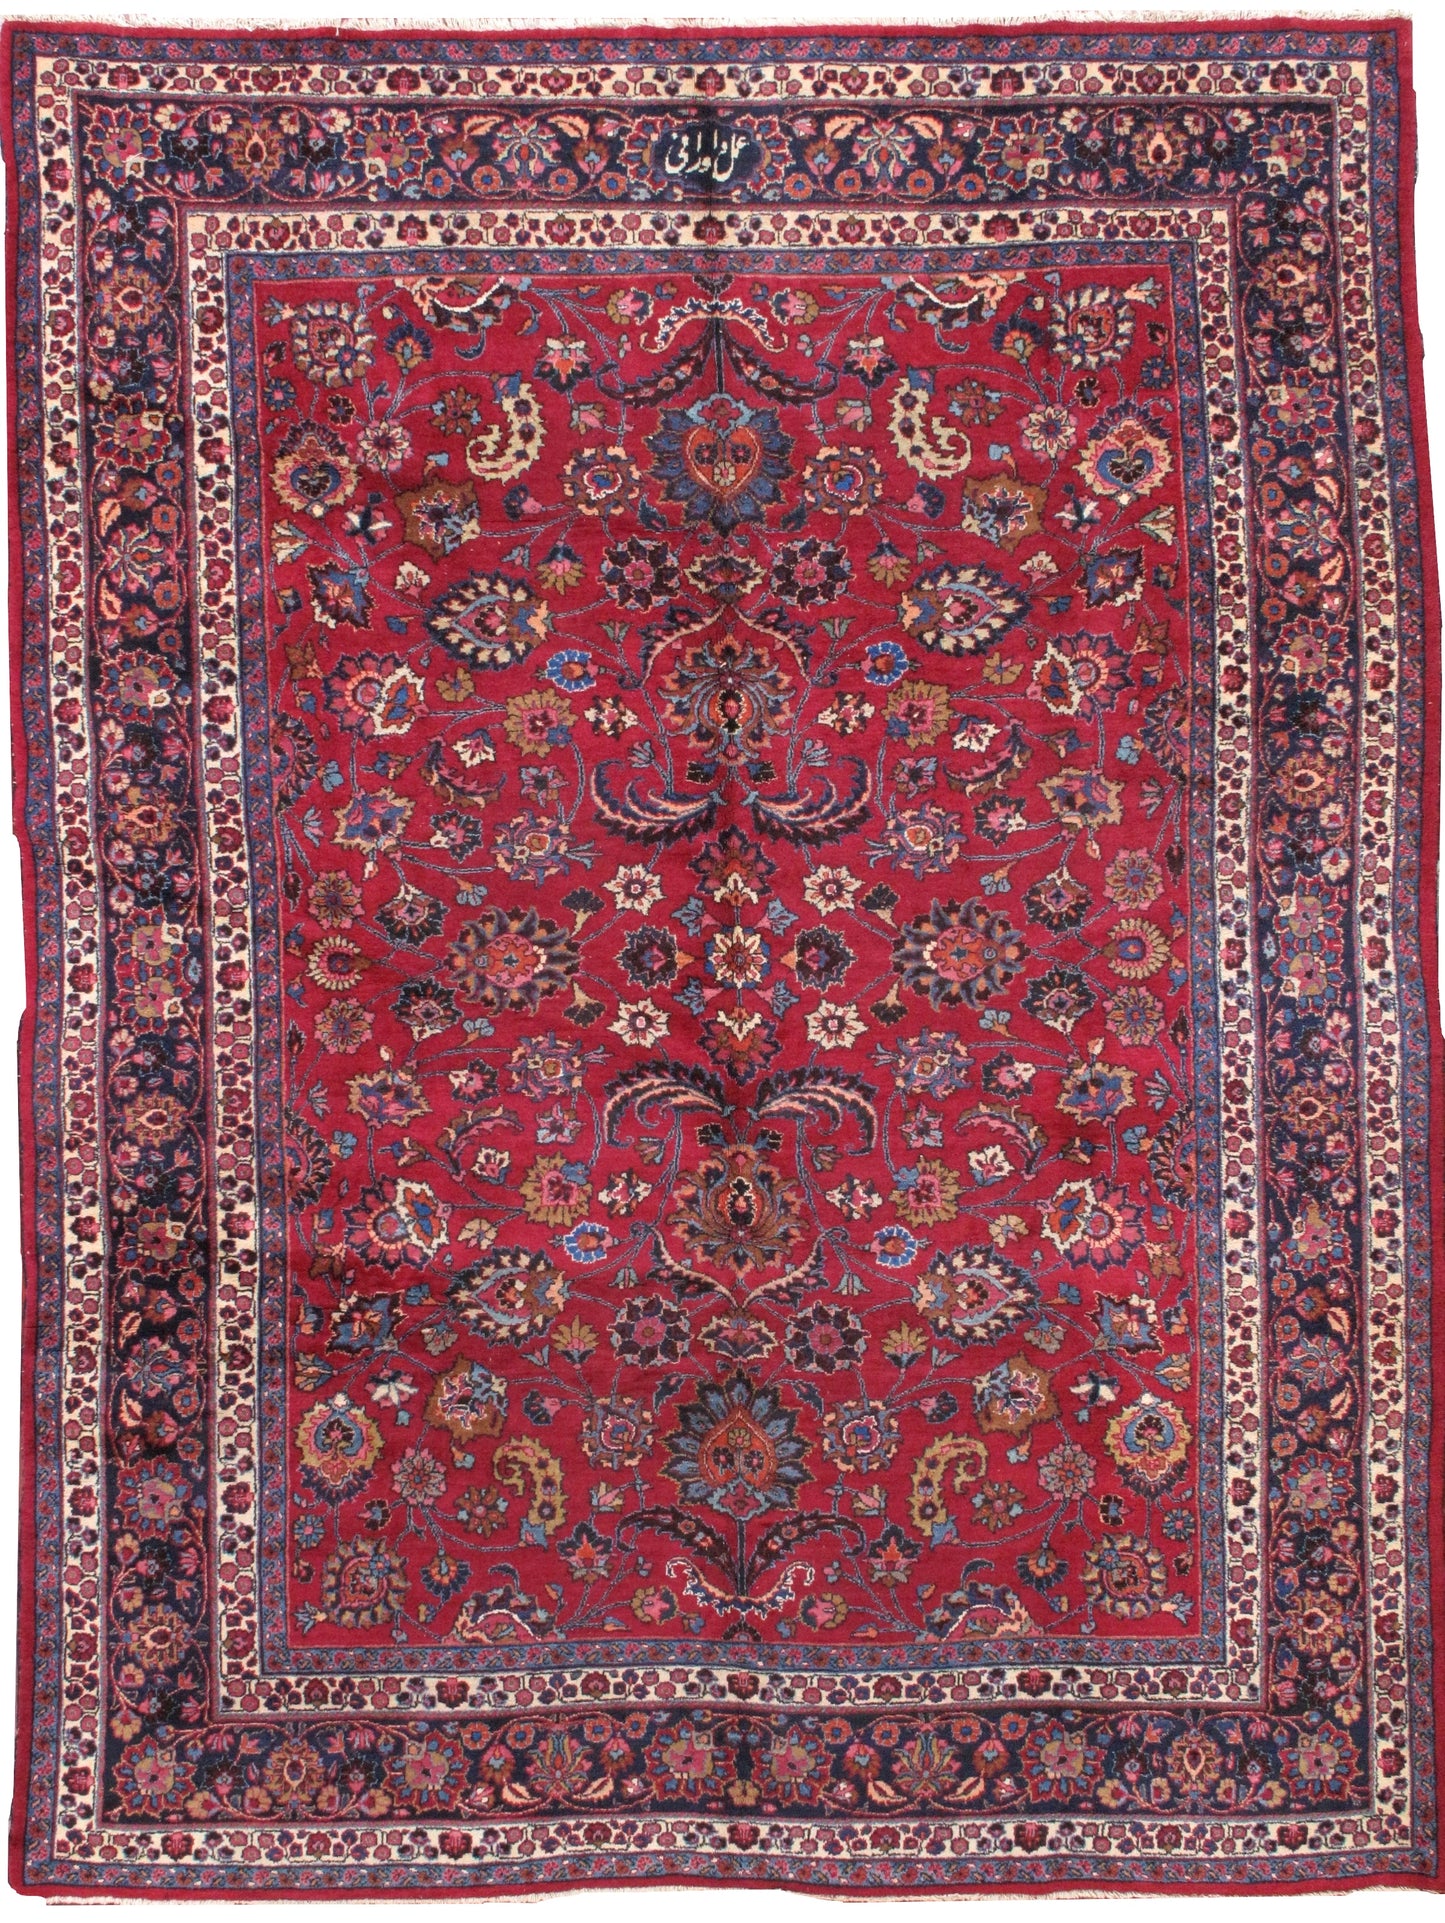 Handmade antique Persian Mashad rug 1910s